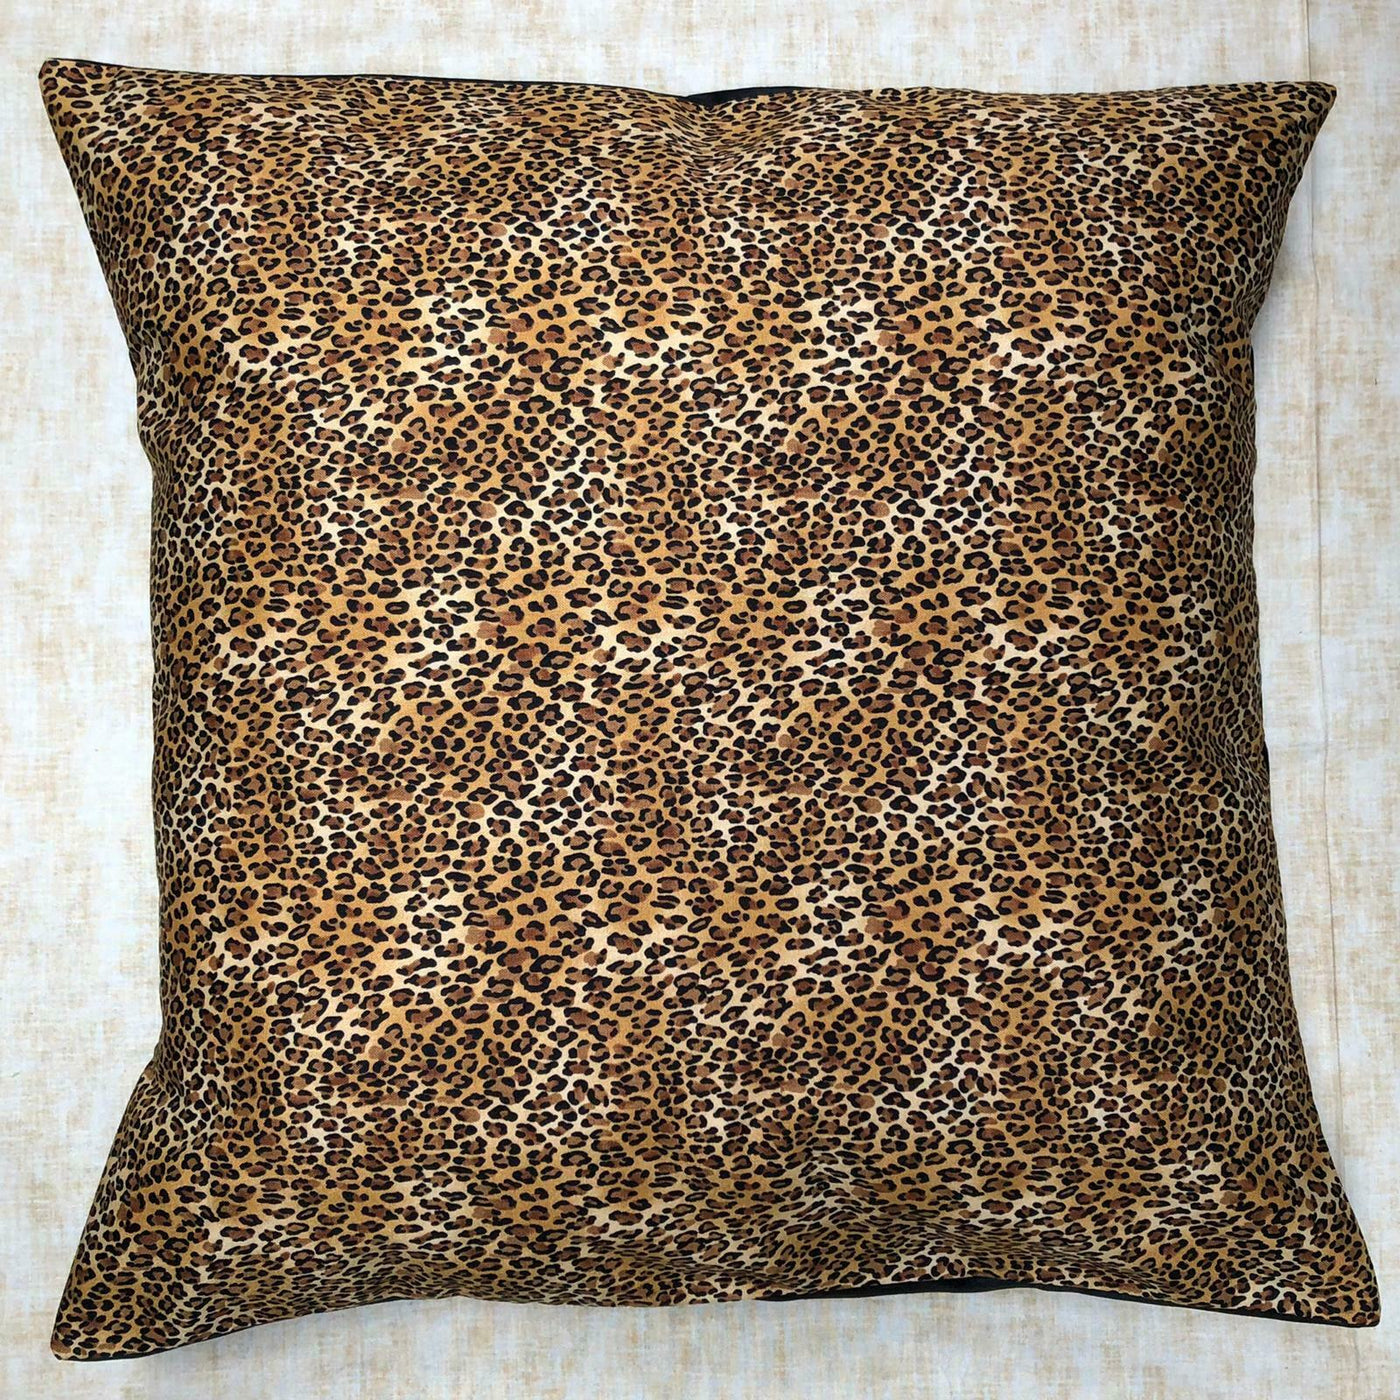 Leopard Print Big Cat Designer Cushion Cover Case fits 18" x 18" 100% Cotton